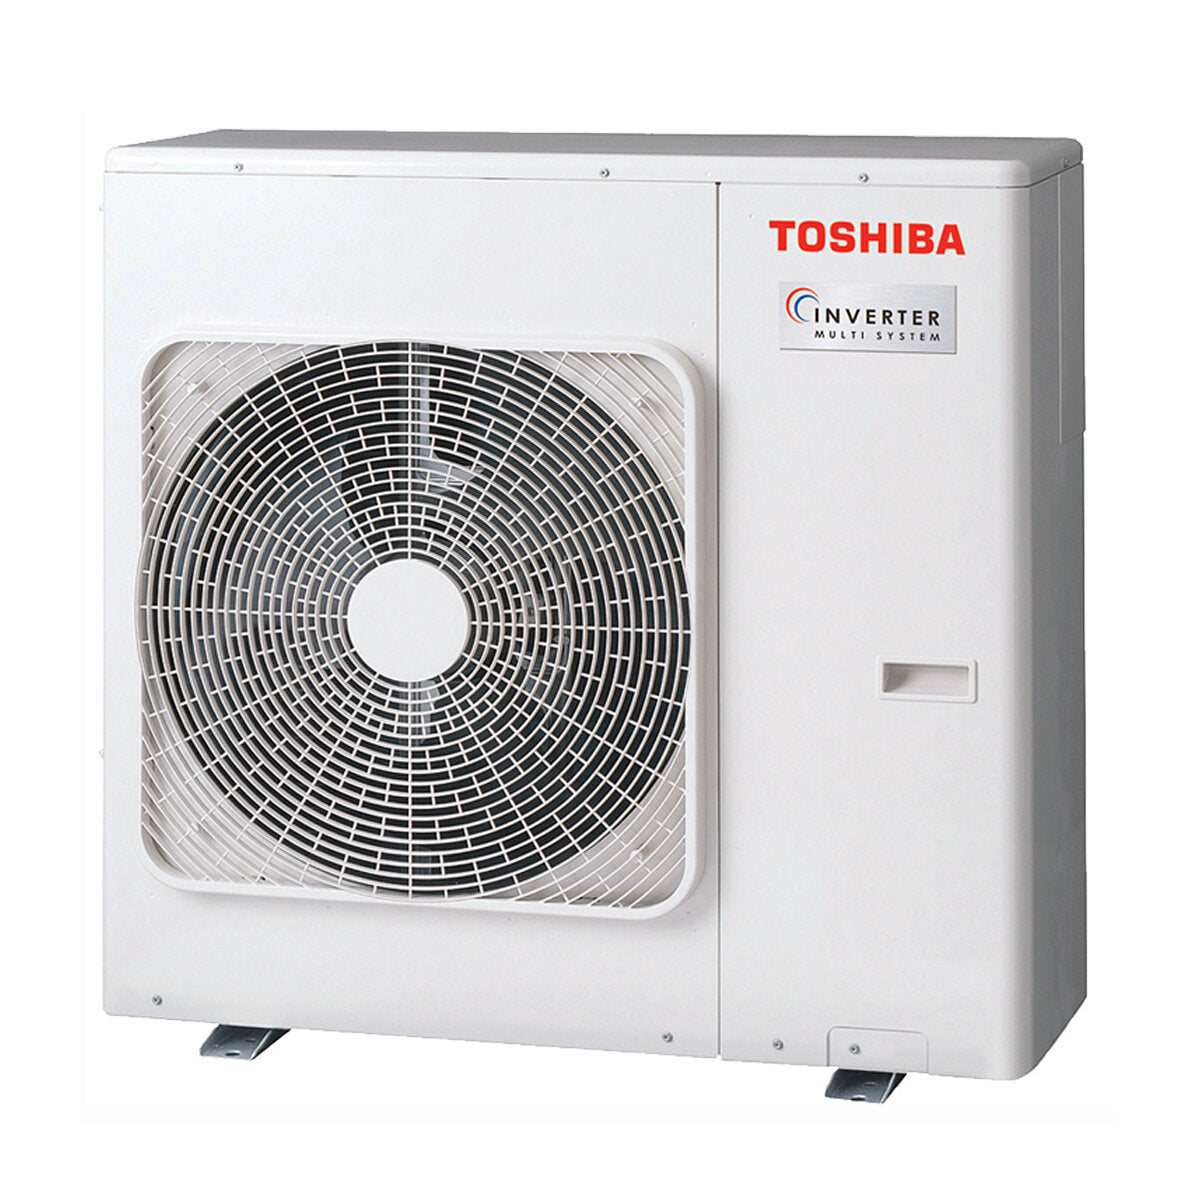 Toshiba Ductable Air Conditioner U2 penta split 7000 + 9000 + 9000 + 9000 + 22000 BTU inverter A ++ outdoor unit 10.0 kW